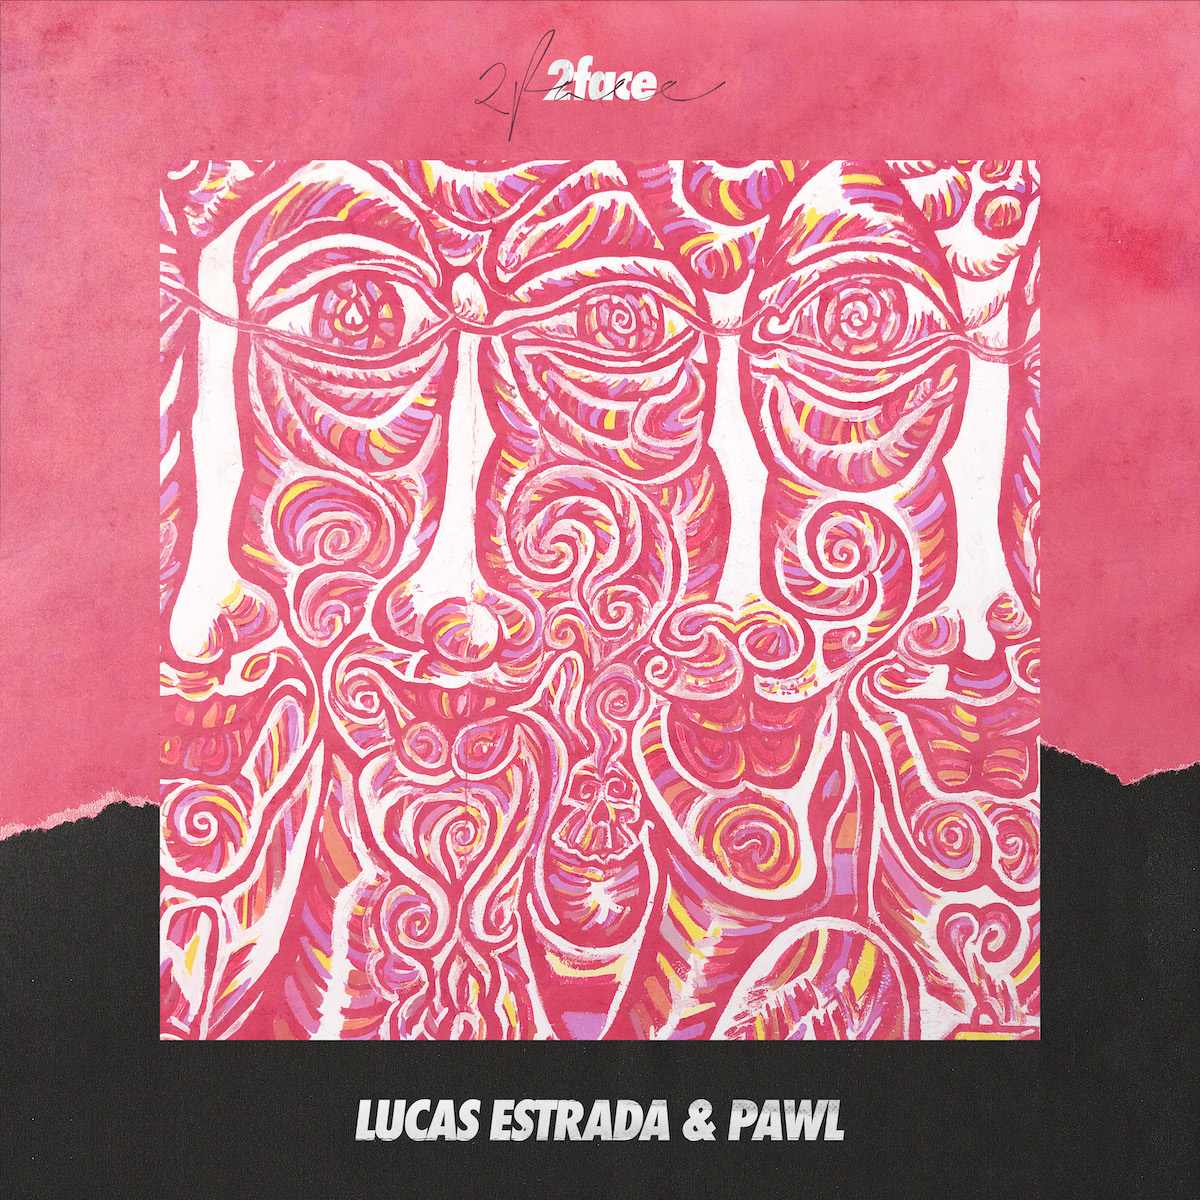 Lucas Estrada & Pawl’s Dynamic New Single “2face”